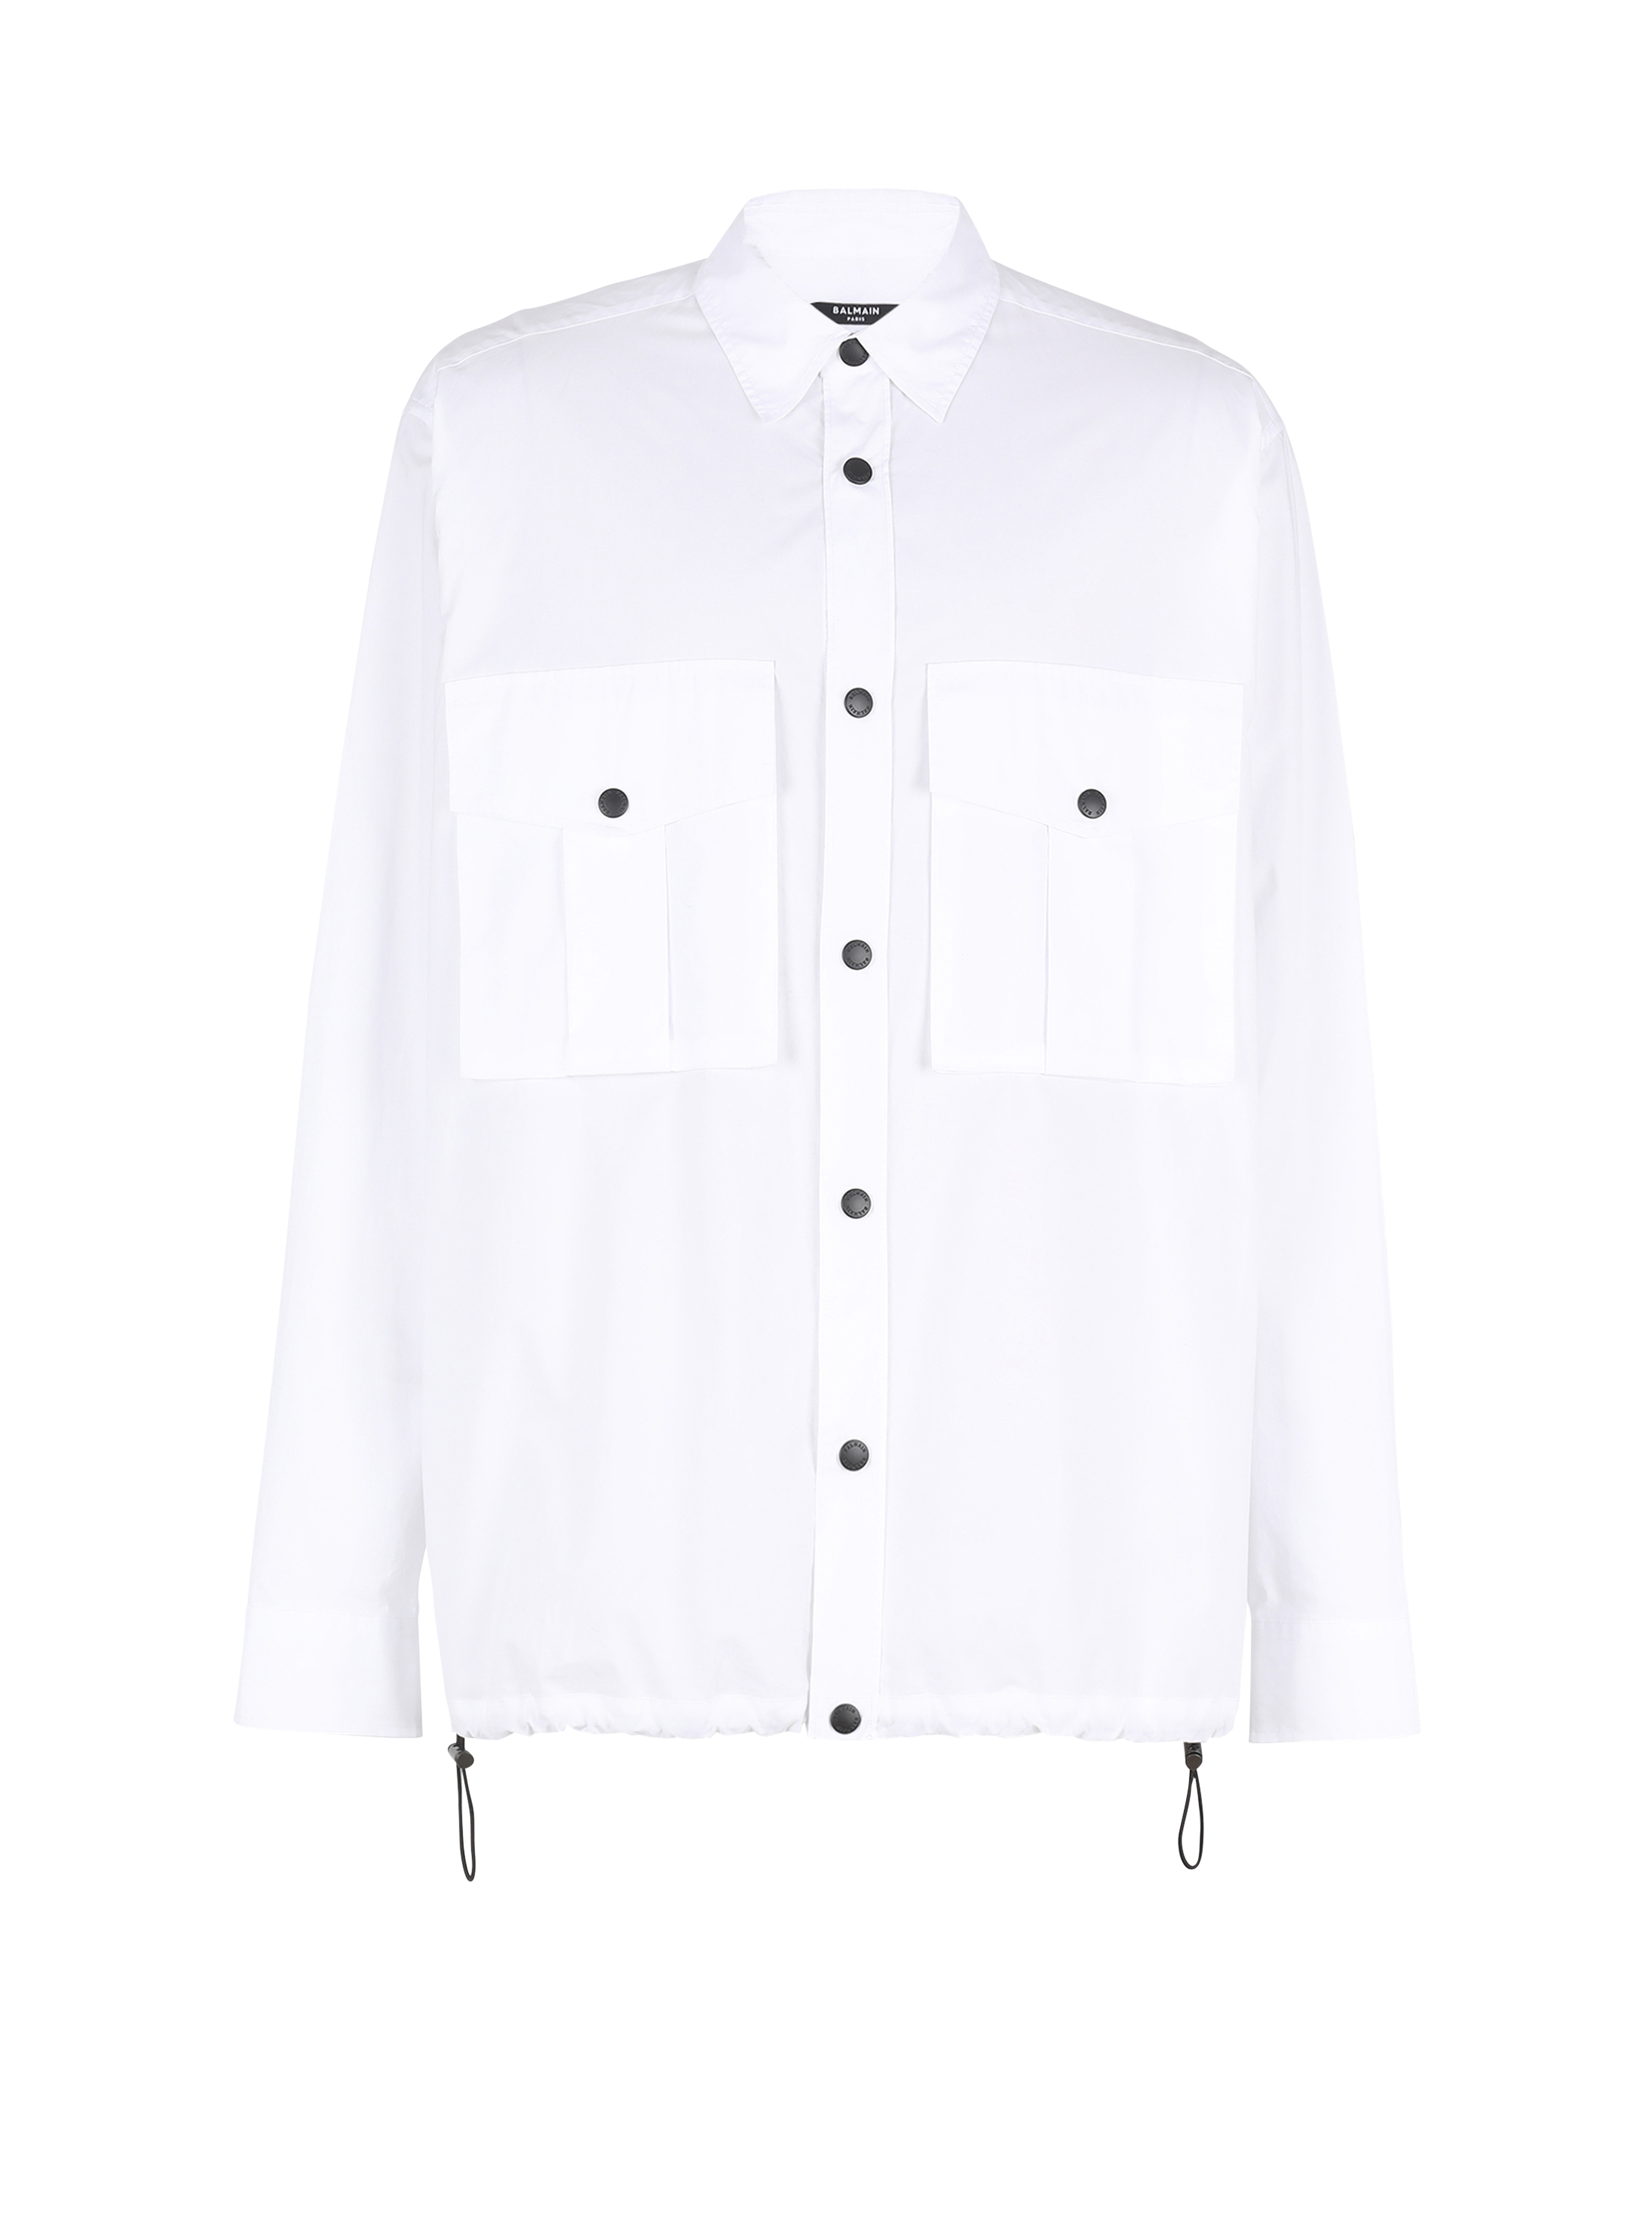 Nylon shirt with Balmain monogram, white